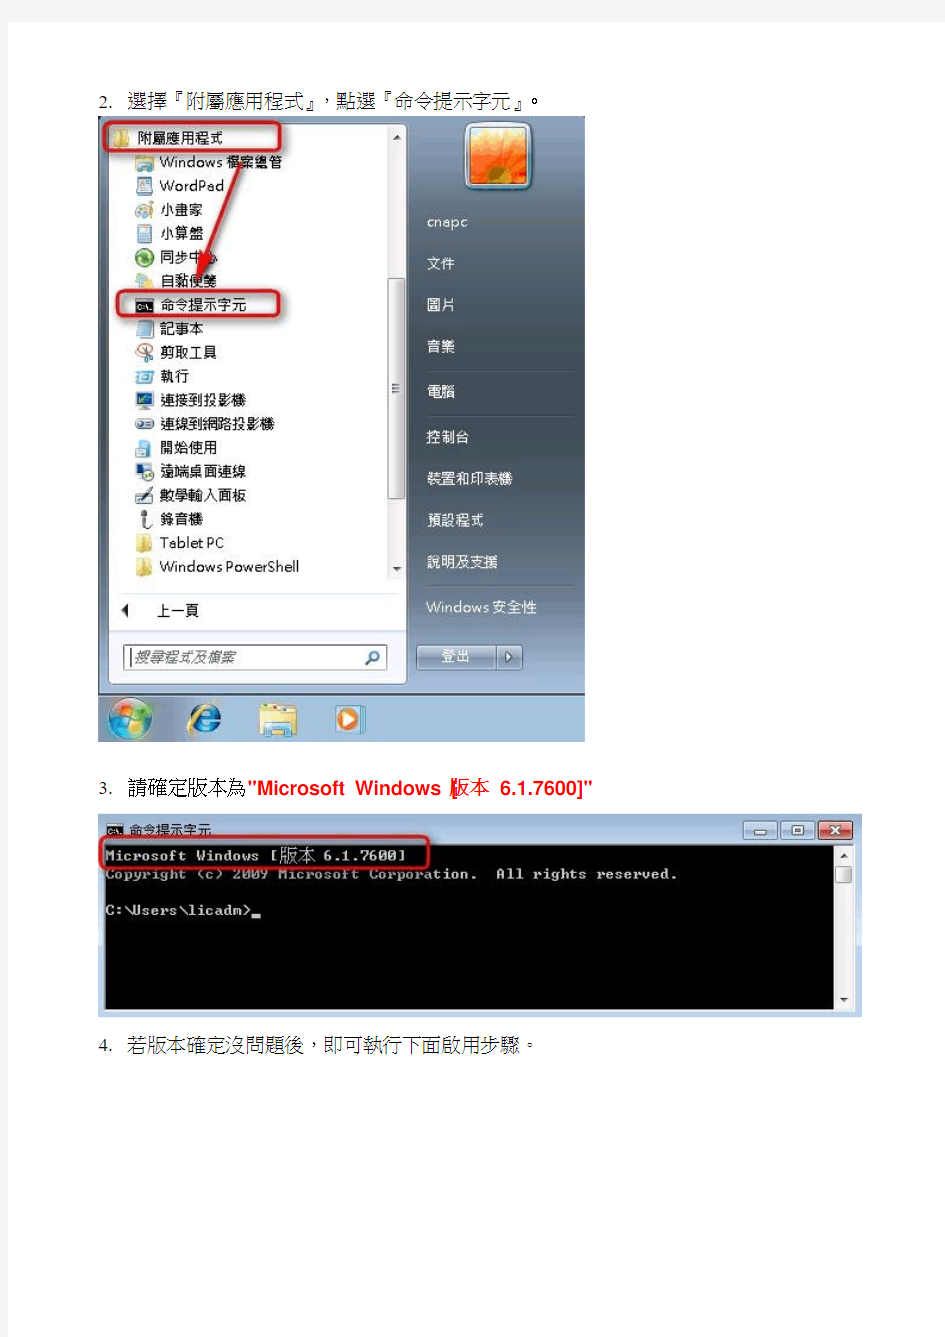 Windows 7 繁体中文企业版校内启用步骤.doc